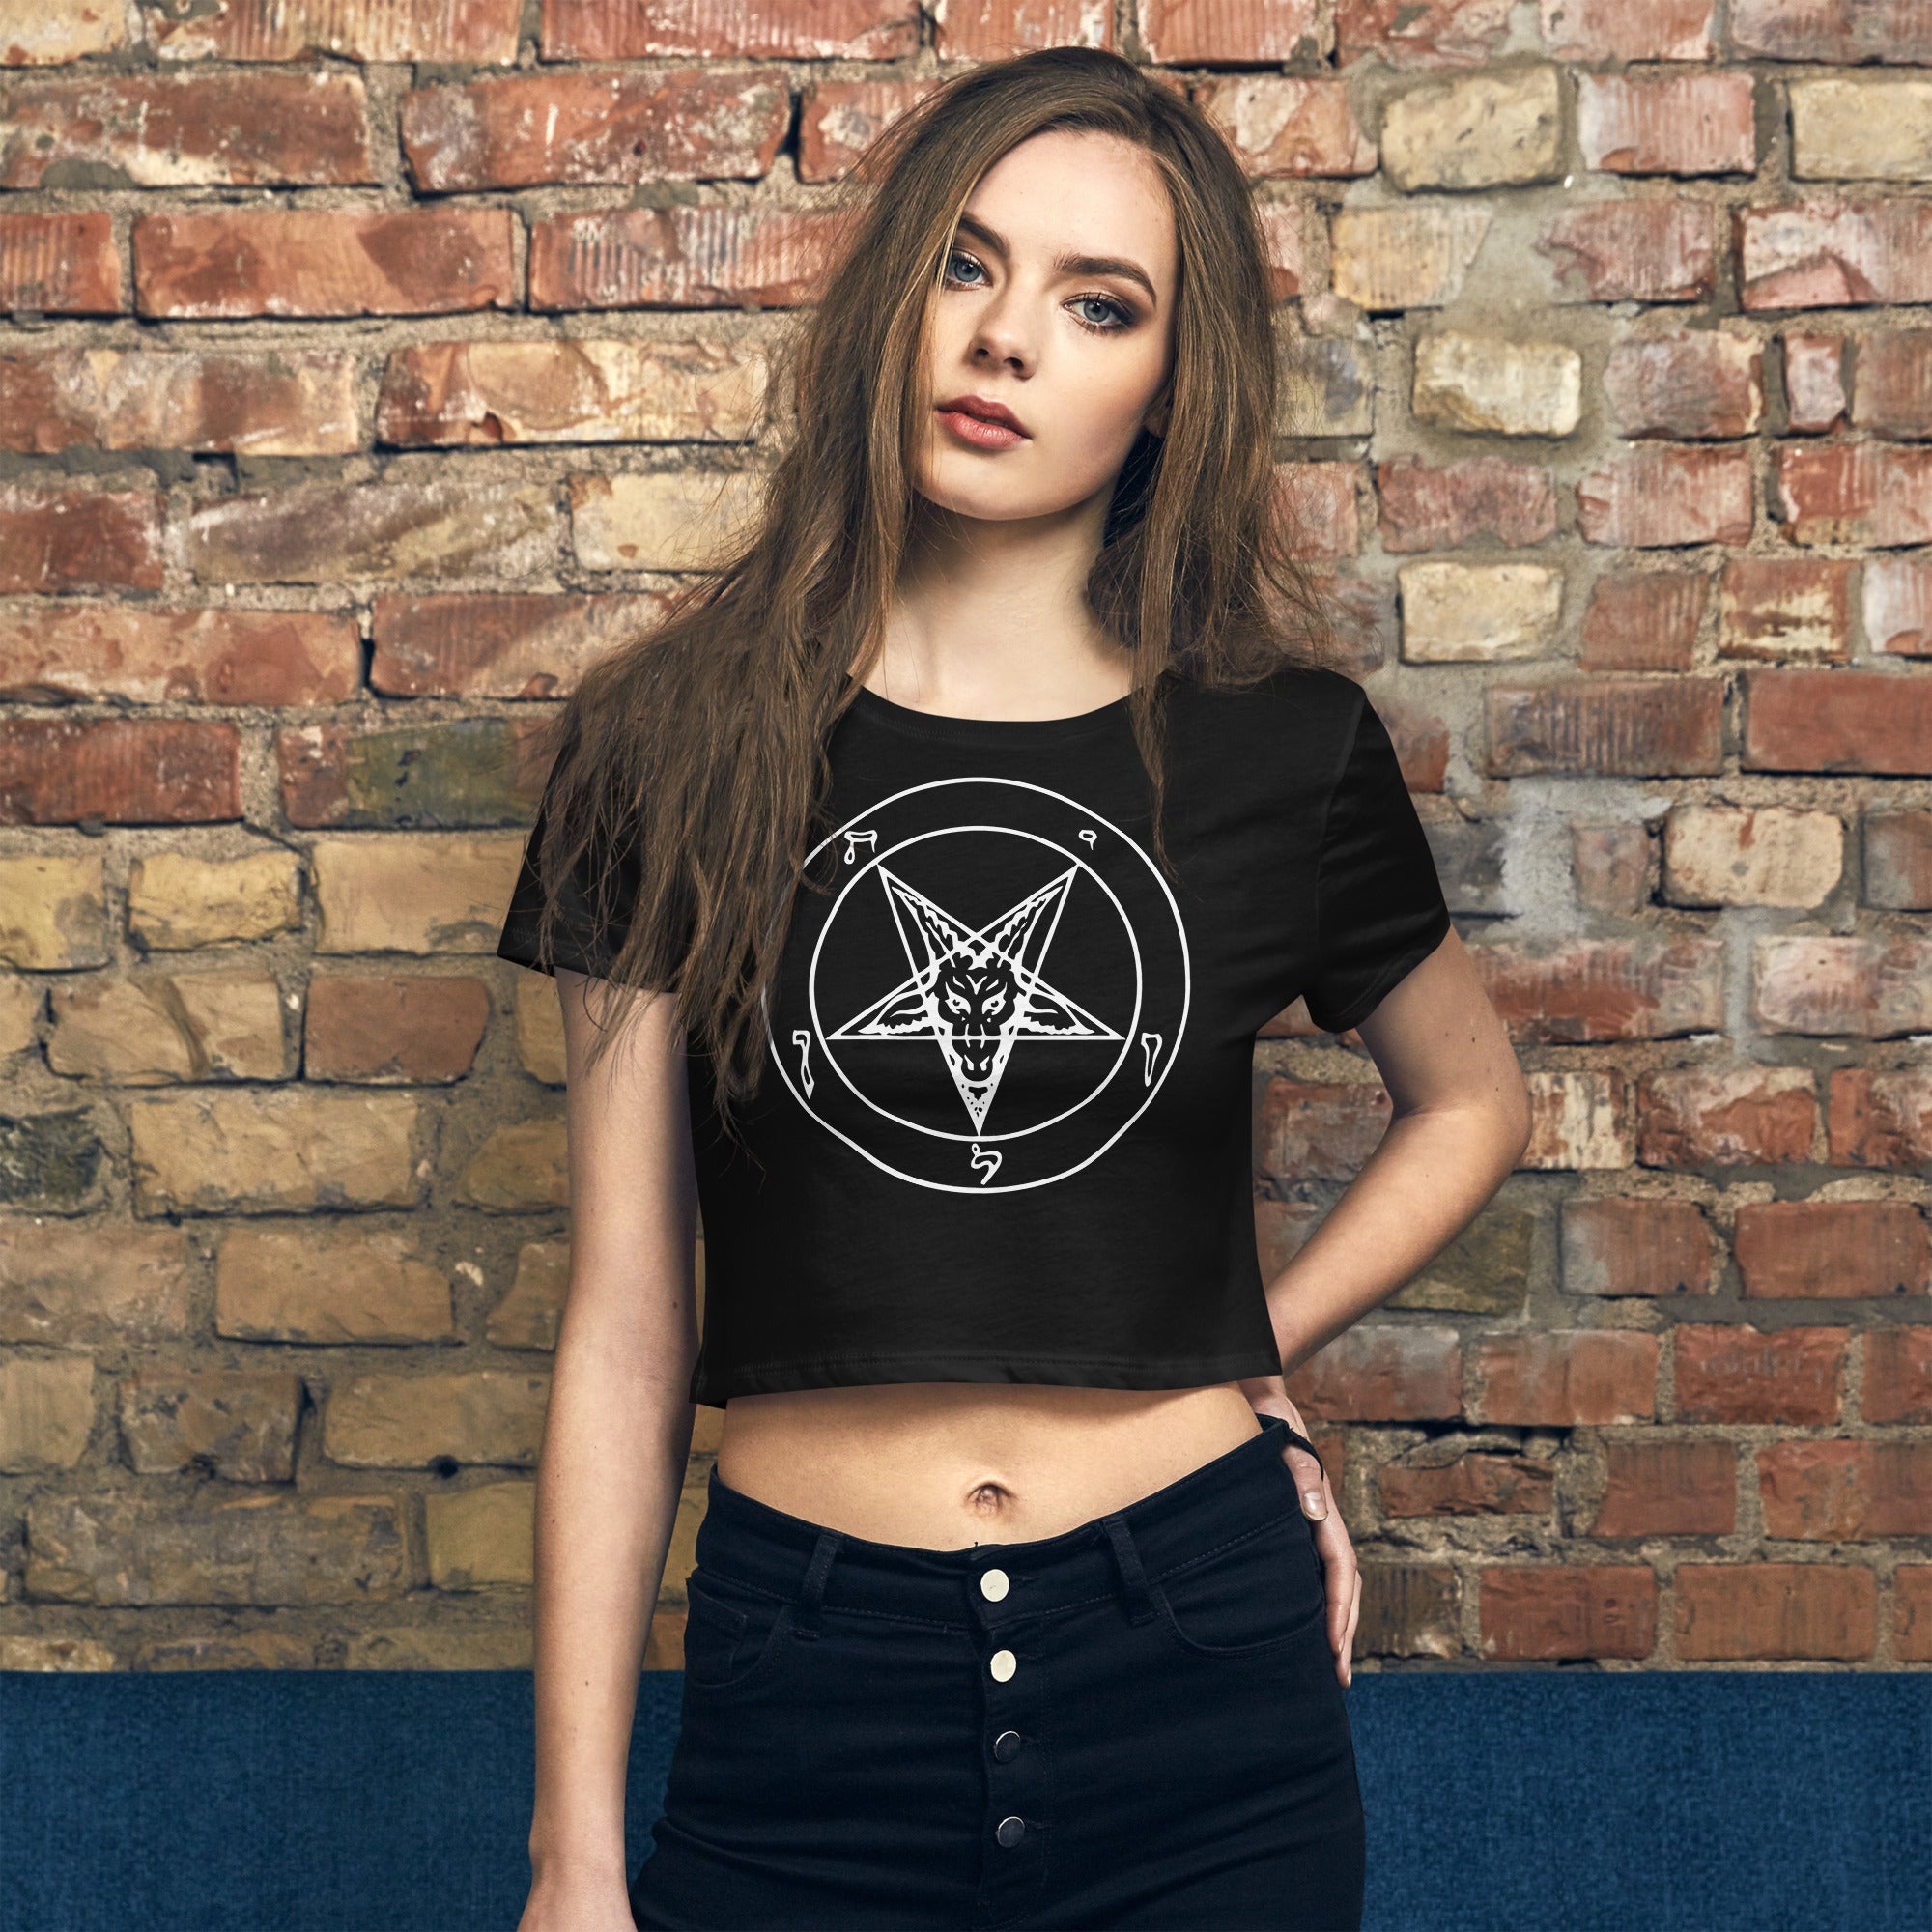 Sigil of Baphomet Occult Symbol on Women’s Crop Top Tee Shirt - Edge of Life Designs